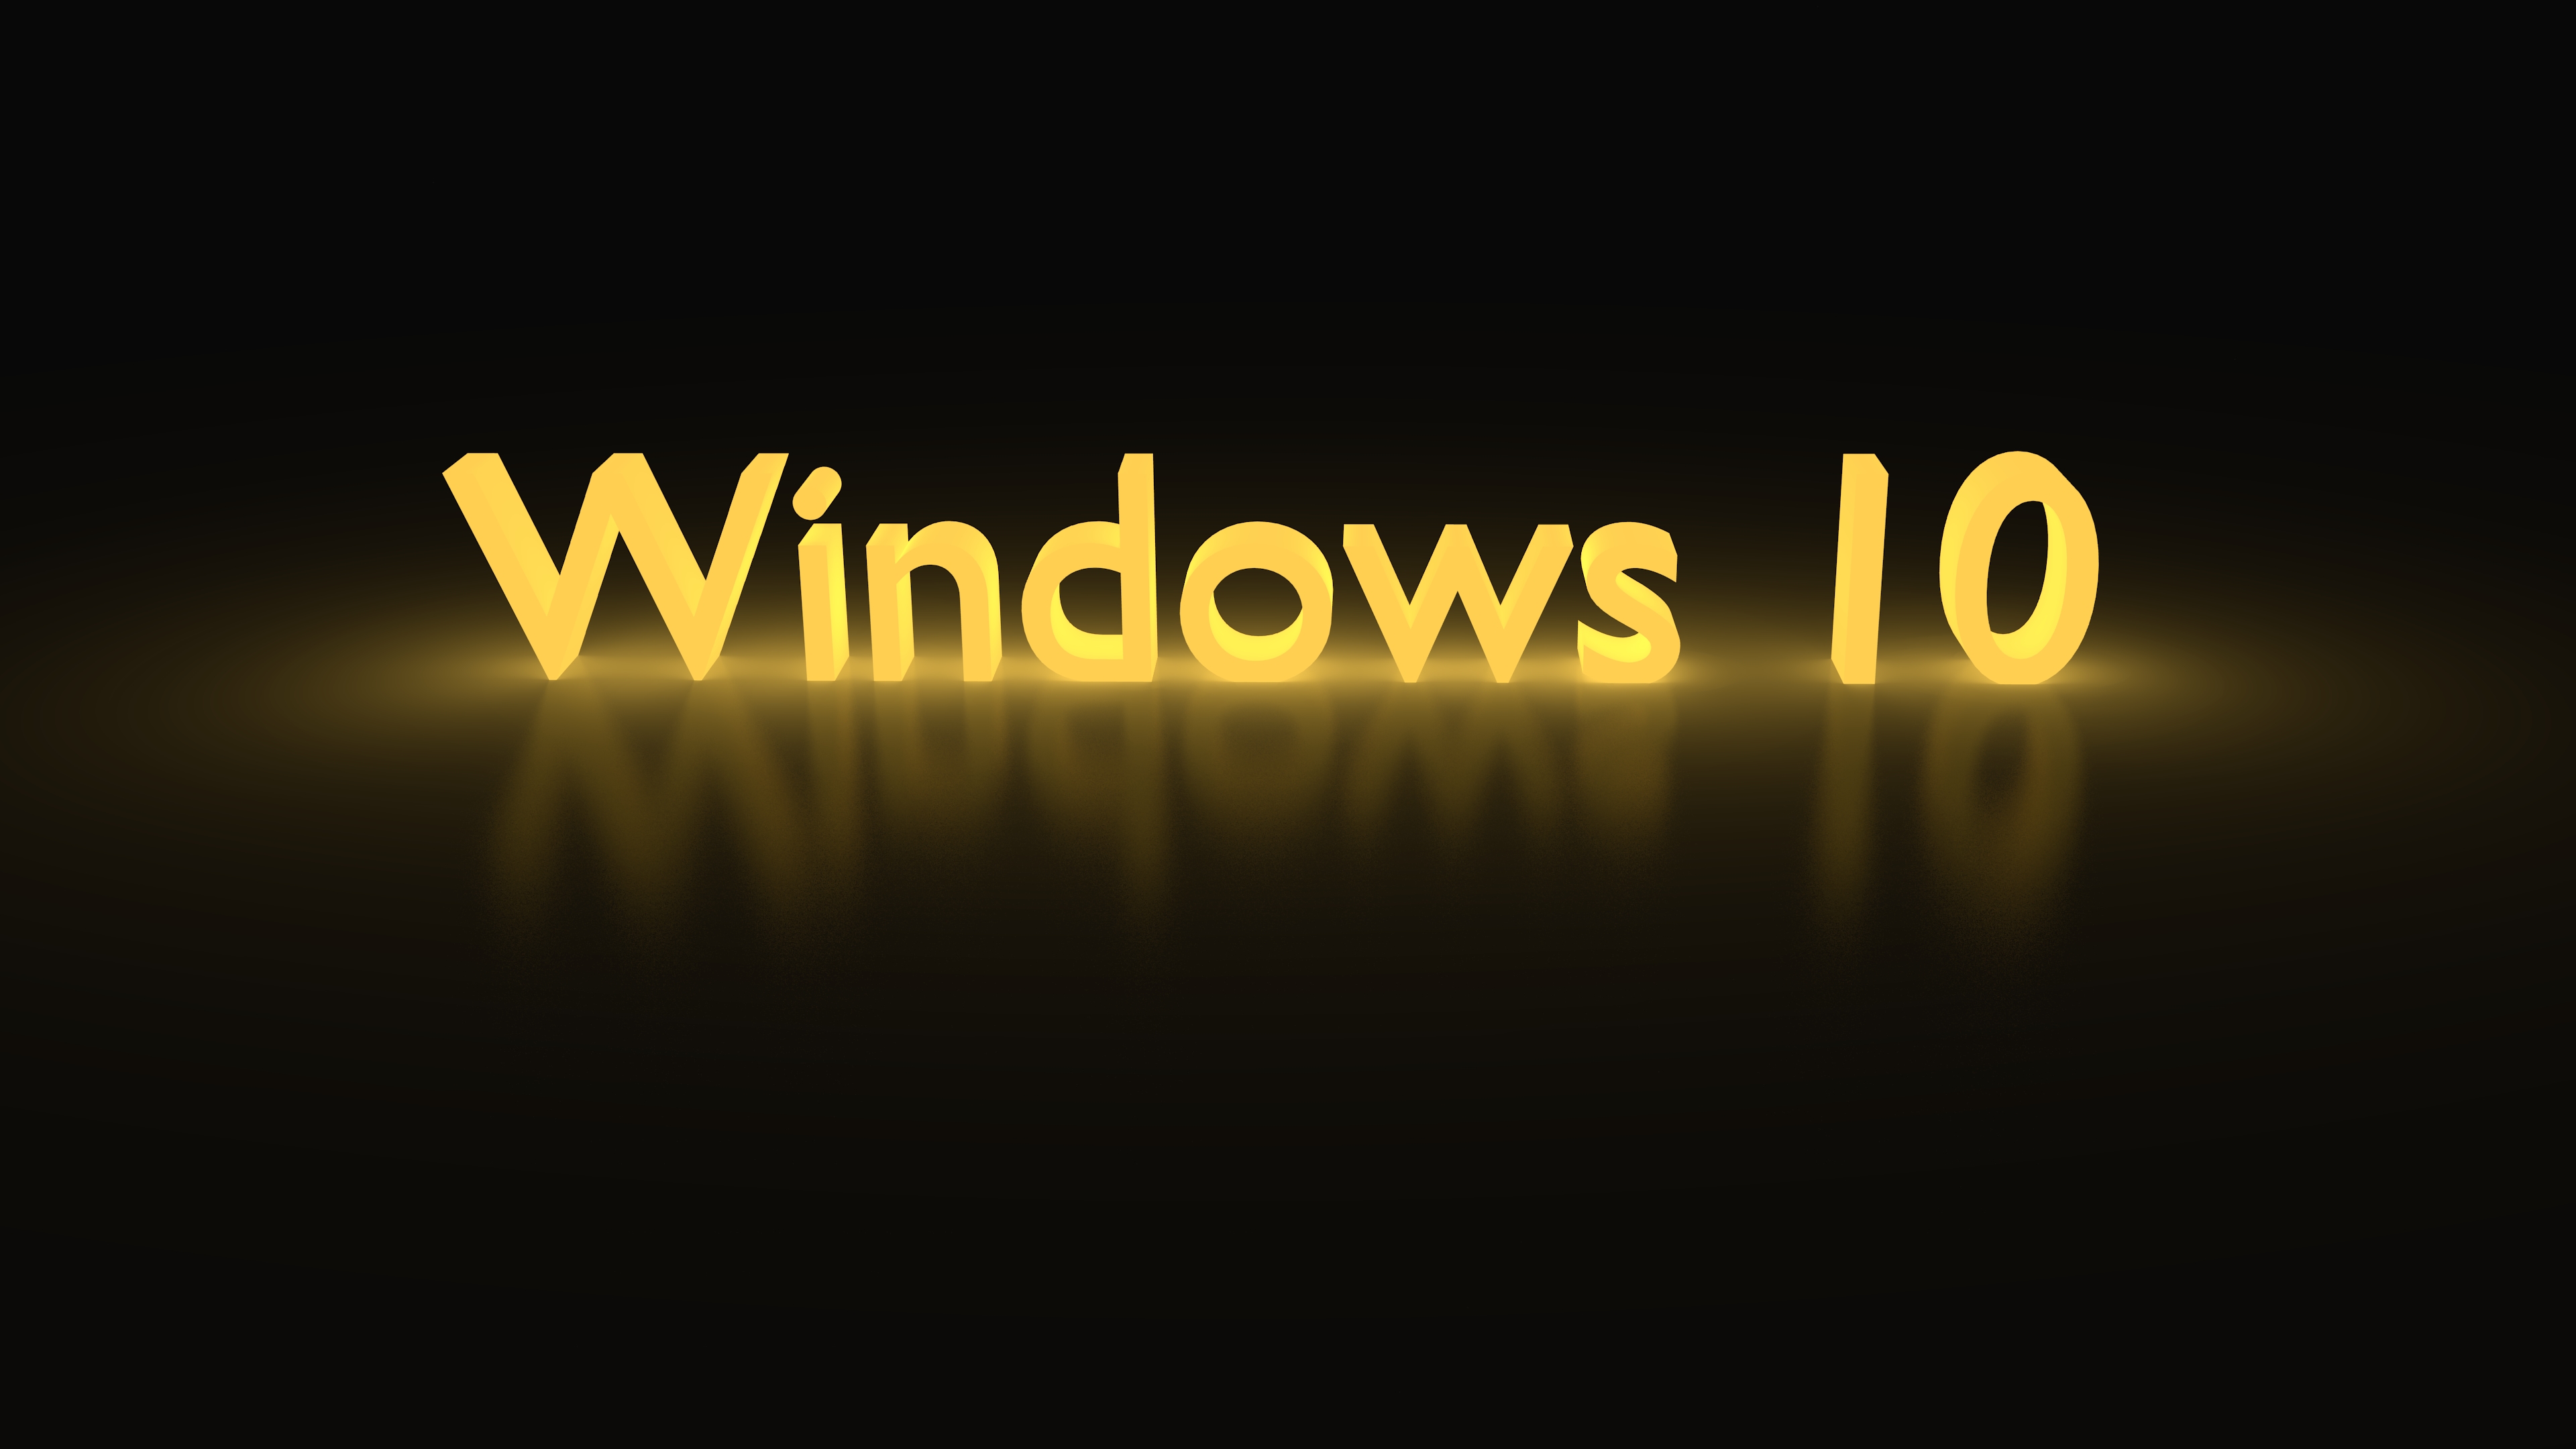 windows 10, technology, windows 8K